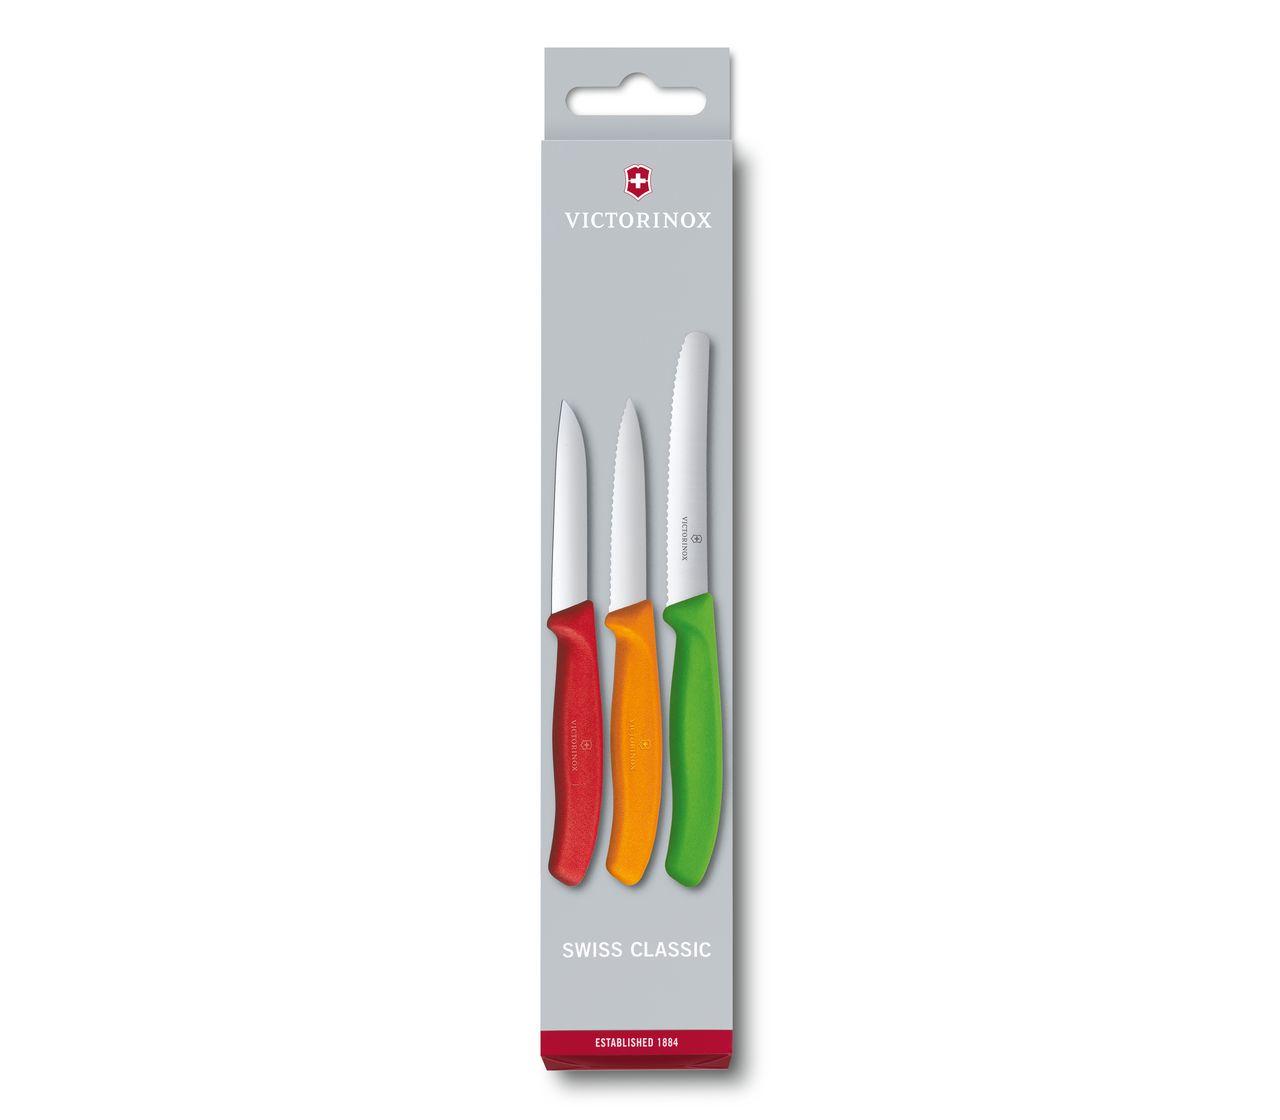 Swiss Classic Paring Knife Set, 3 Pieces-6.7116.32